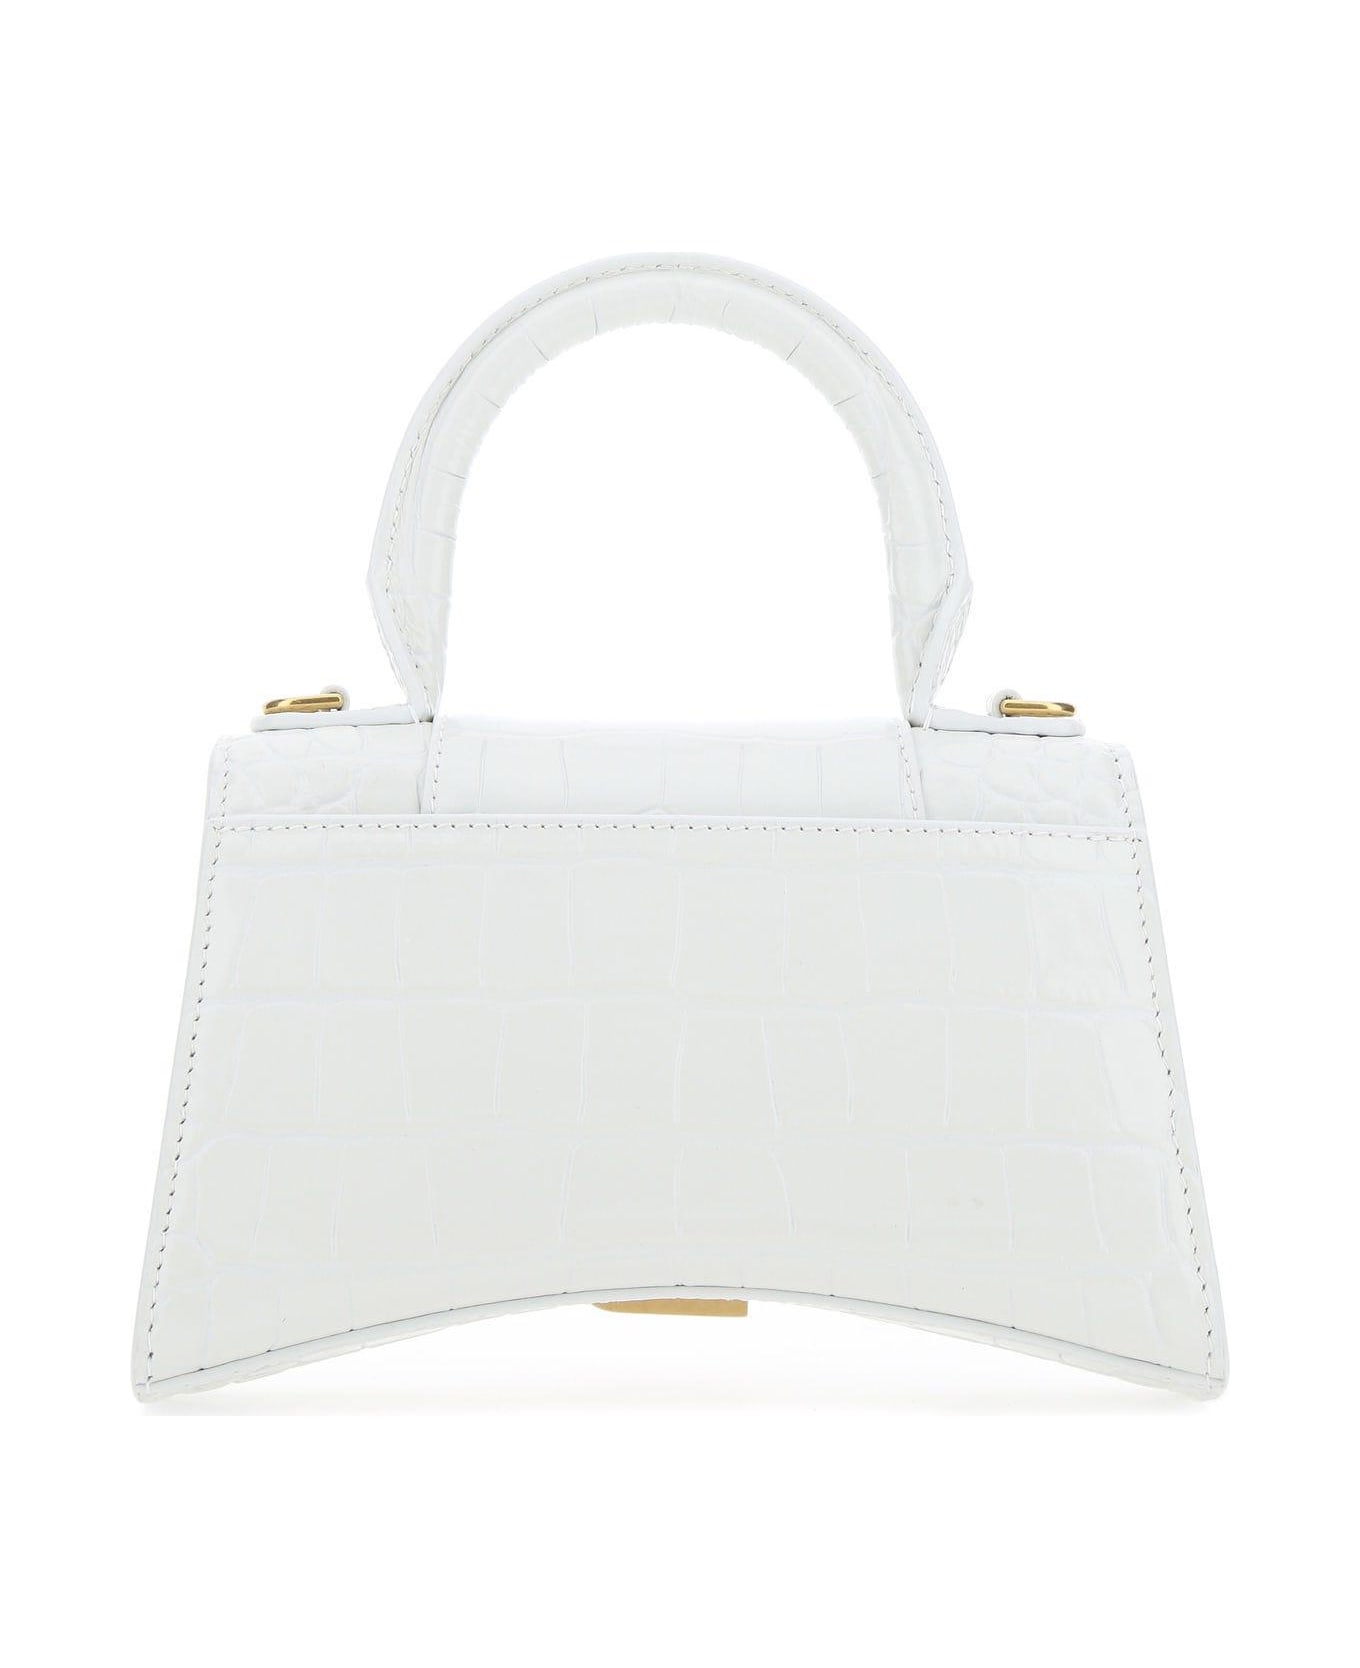 Balenciaga White Leather Xs Hourglass Handbag - Bianco